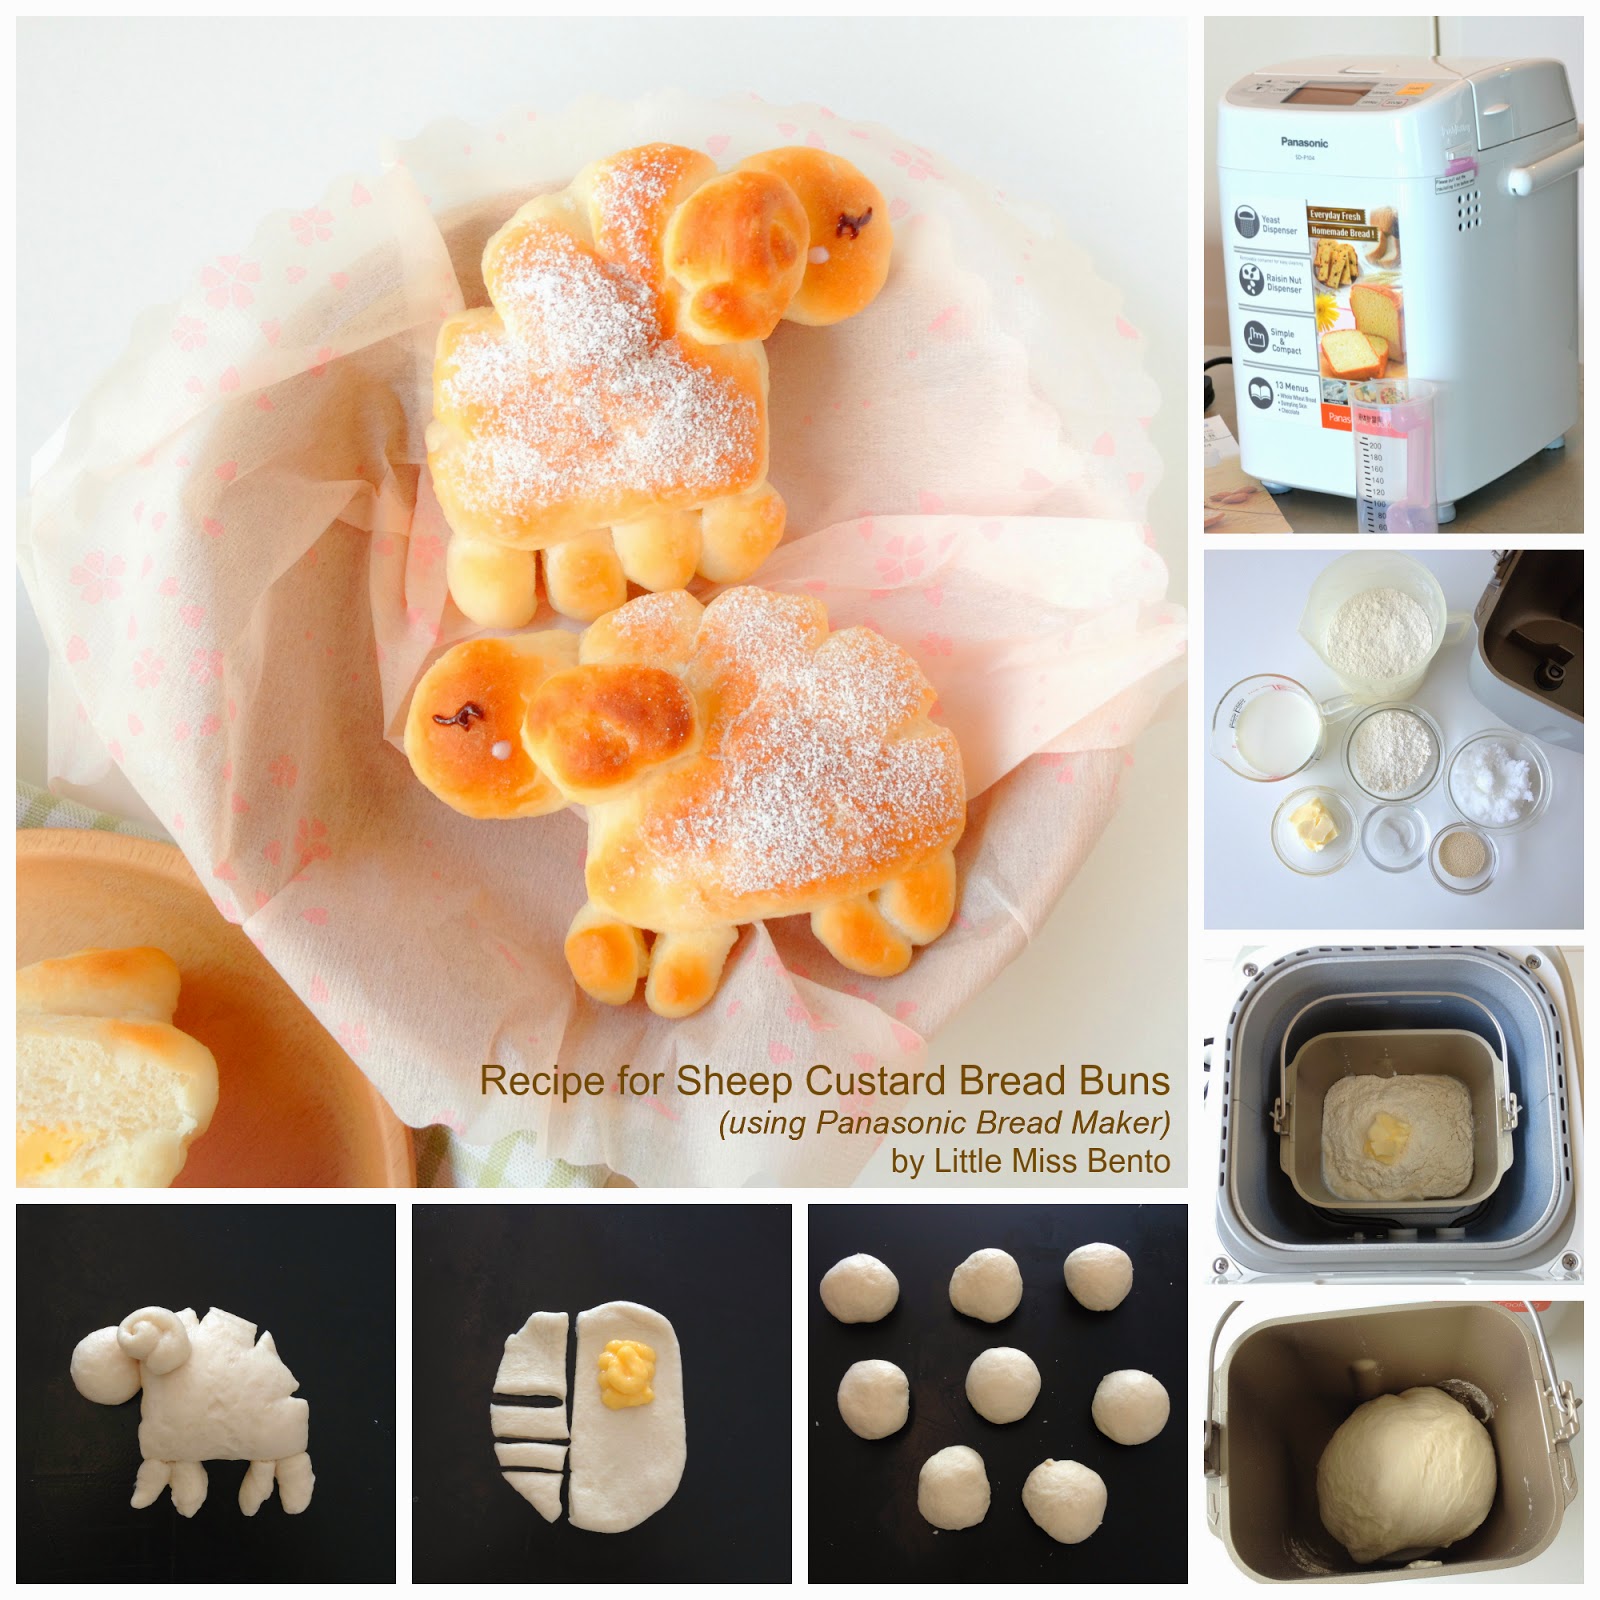 https://1.bp.blogspot.com/-UF_mNvo35Xc/U8MrQhHU1OI/AAAAAAAAR0c/AEzPsLA0vZI/s1600/Recipe+for+Homemade+Custard+Bread+Buns+Sheep+Bread.jpg